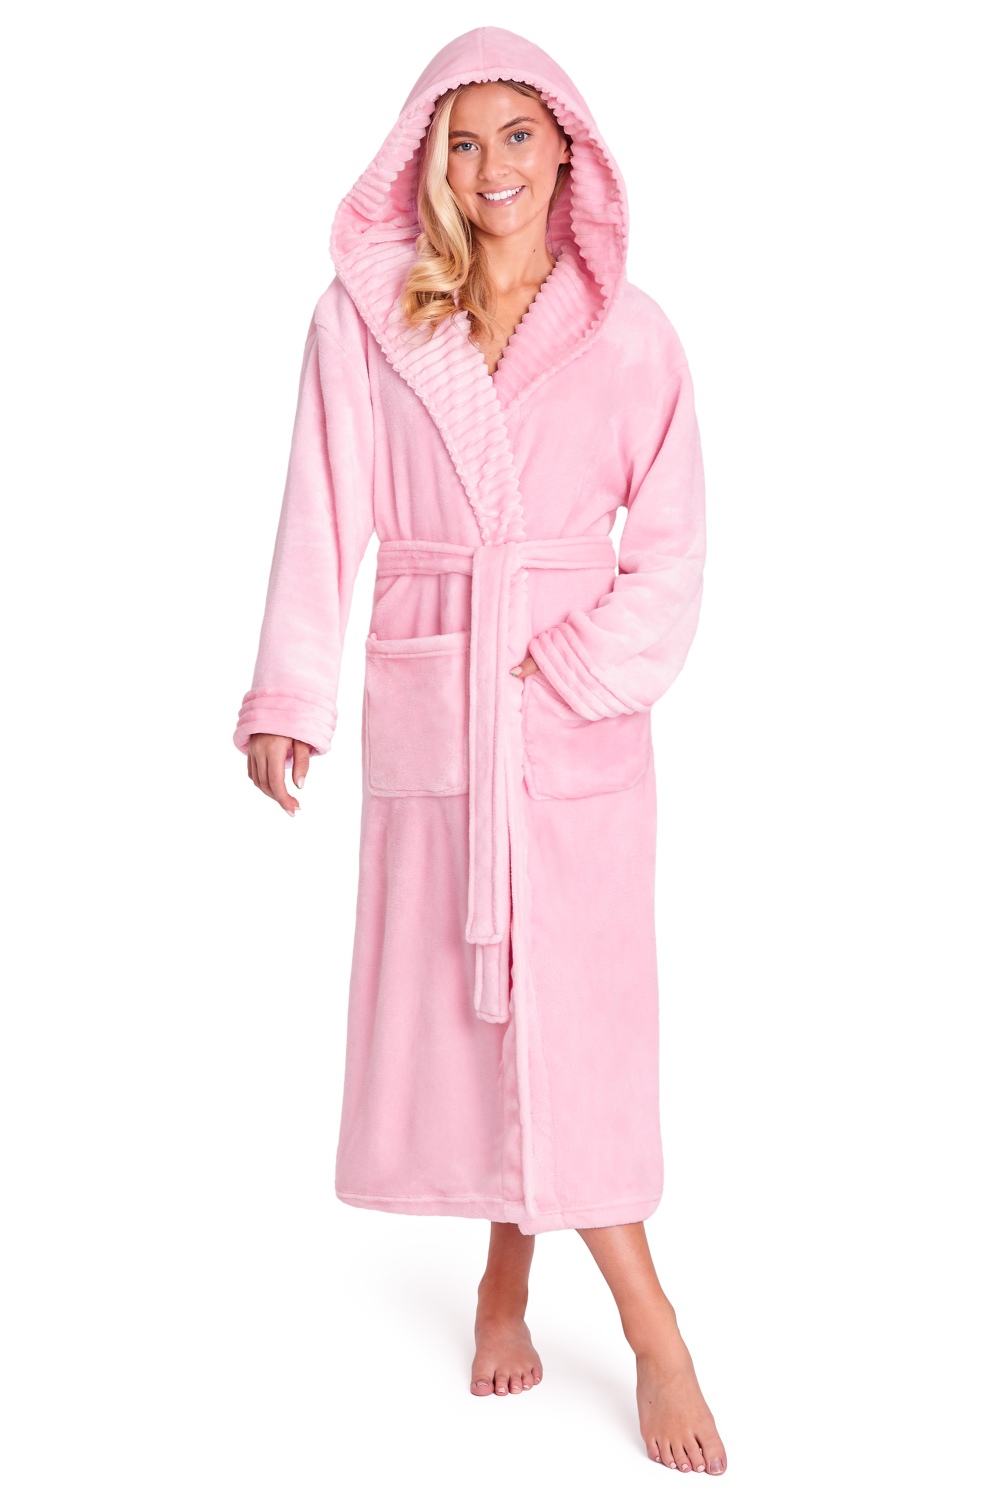 DISNEY STORE DISNEY Winnie the Pooh Ladies Bathrobe Hooded Dressing Gown  BNWT £33.99 - PicClick UK